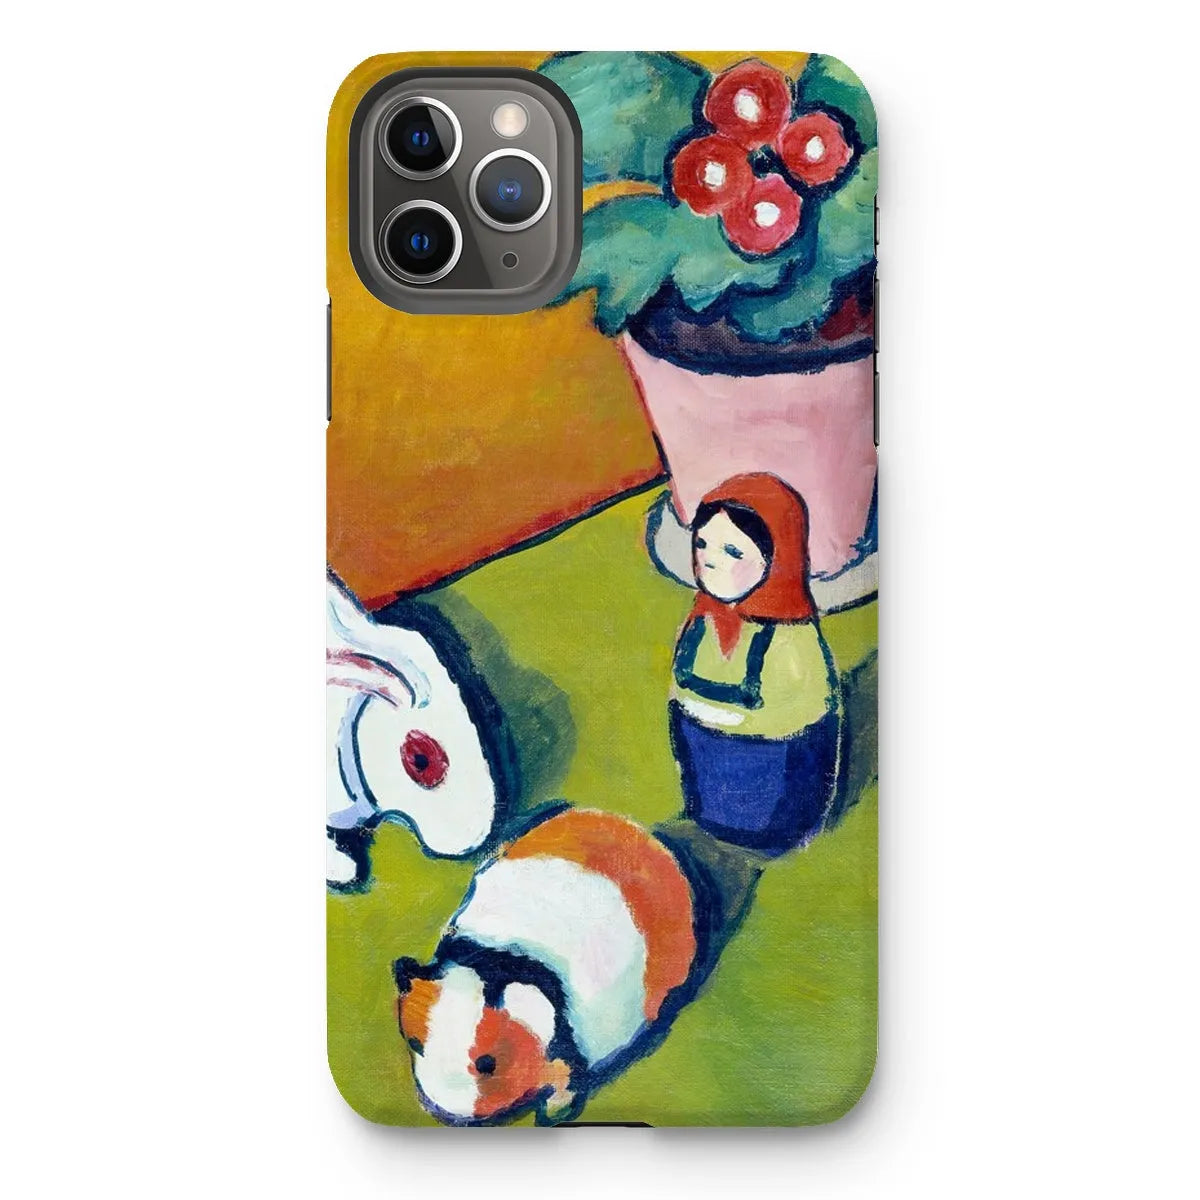 Little Walter’s Toys Art Phone Case - August Macke - Iphone 11 Pro Max / Matte - Mobile Phone Cases - Aesthetic Art